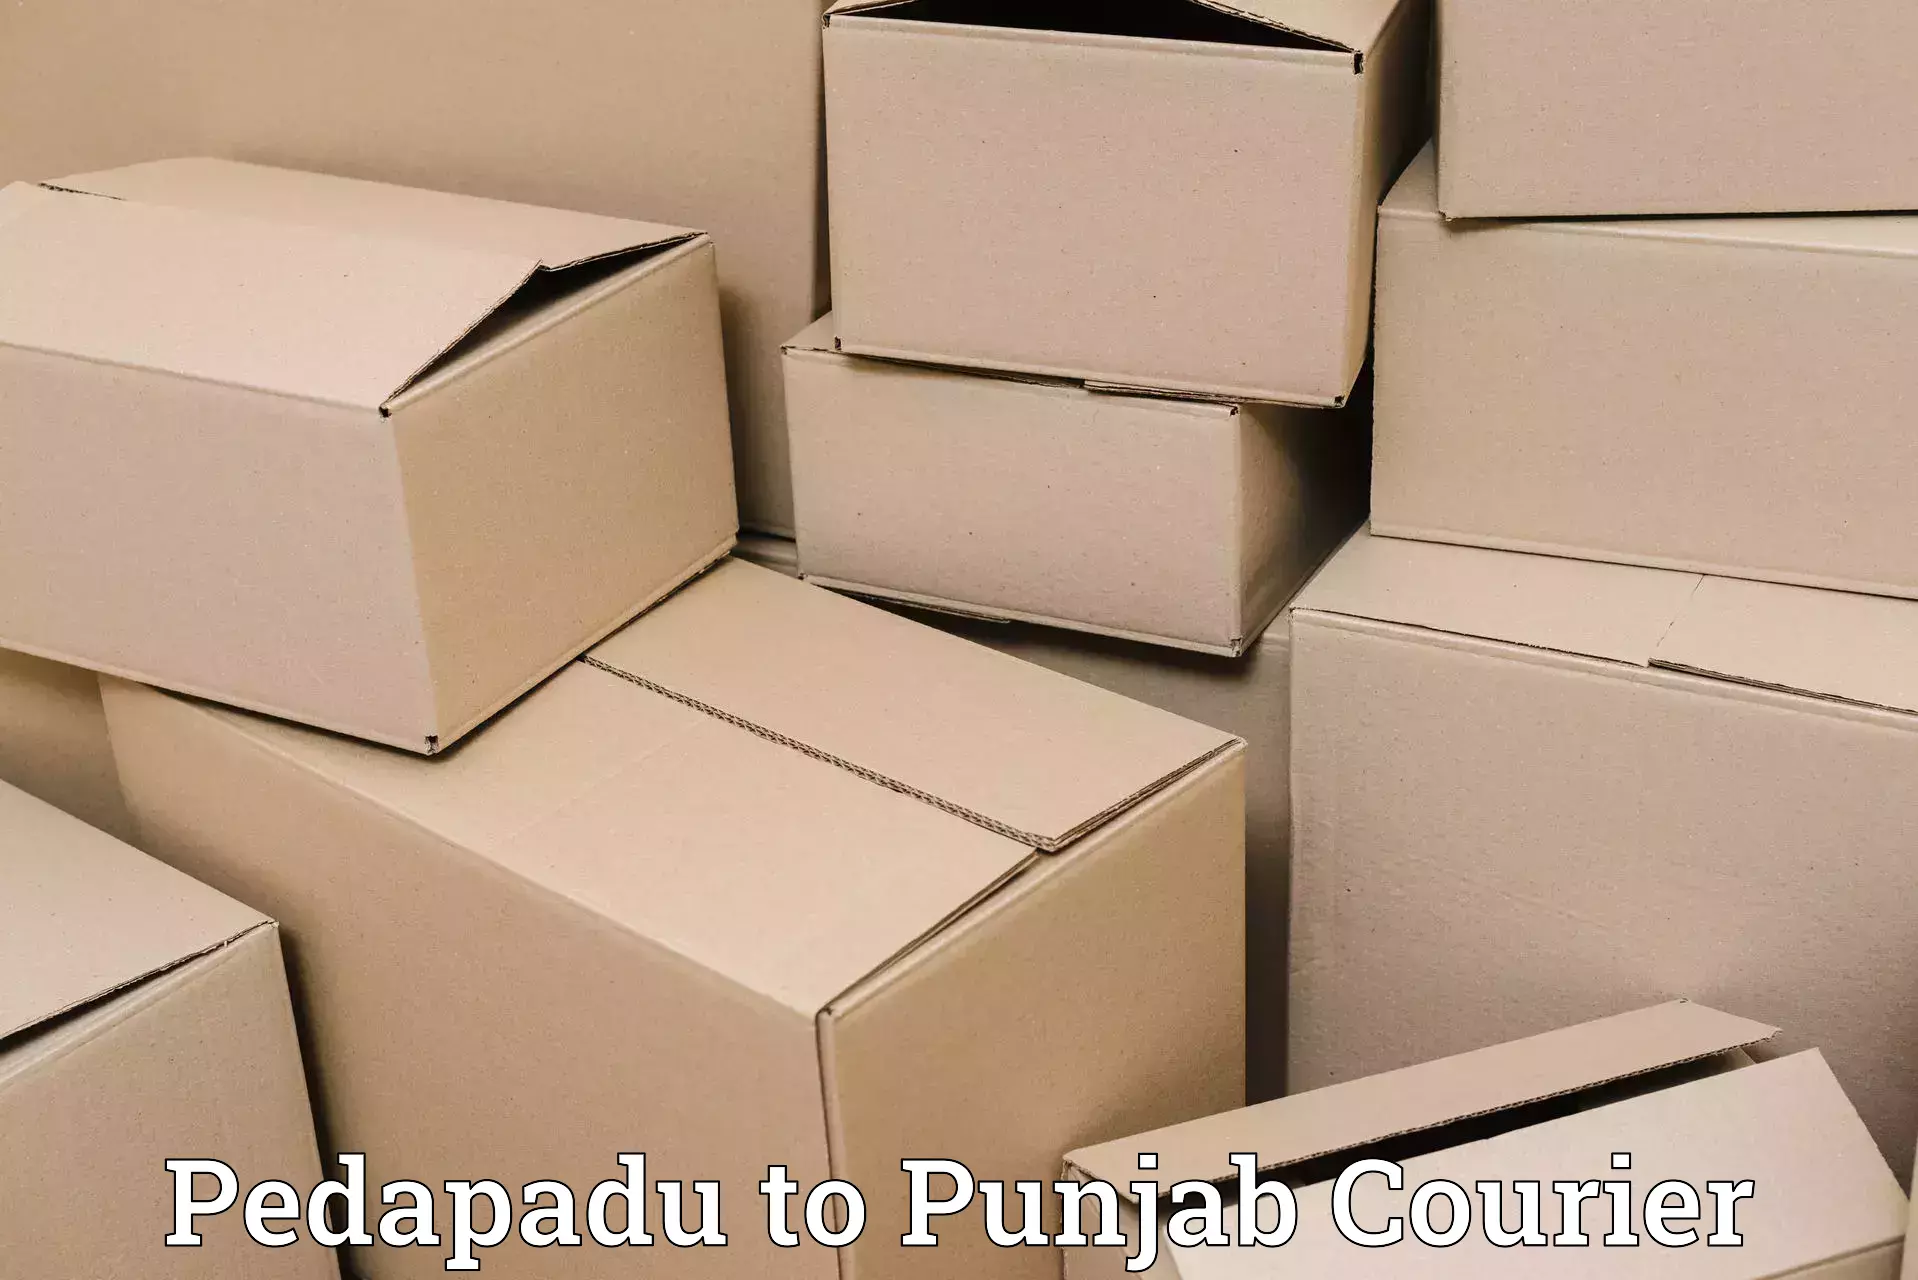 International courier networks Pedapadu to Talwara